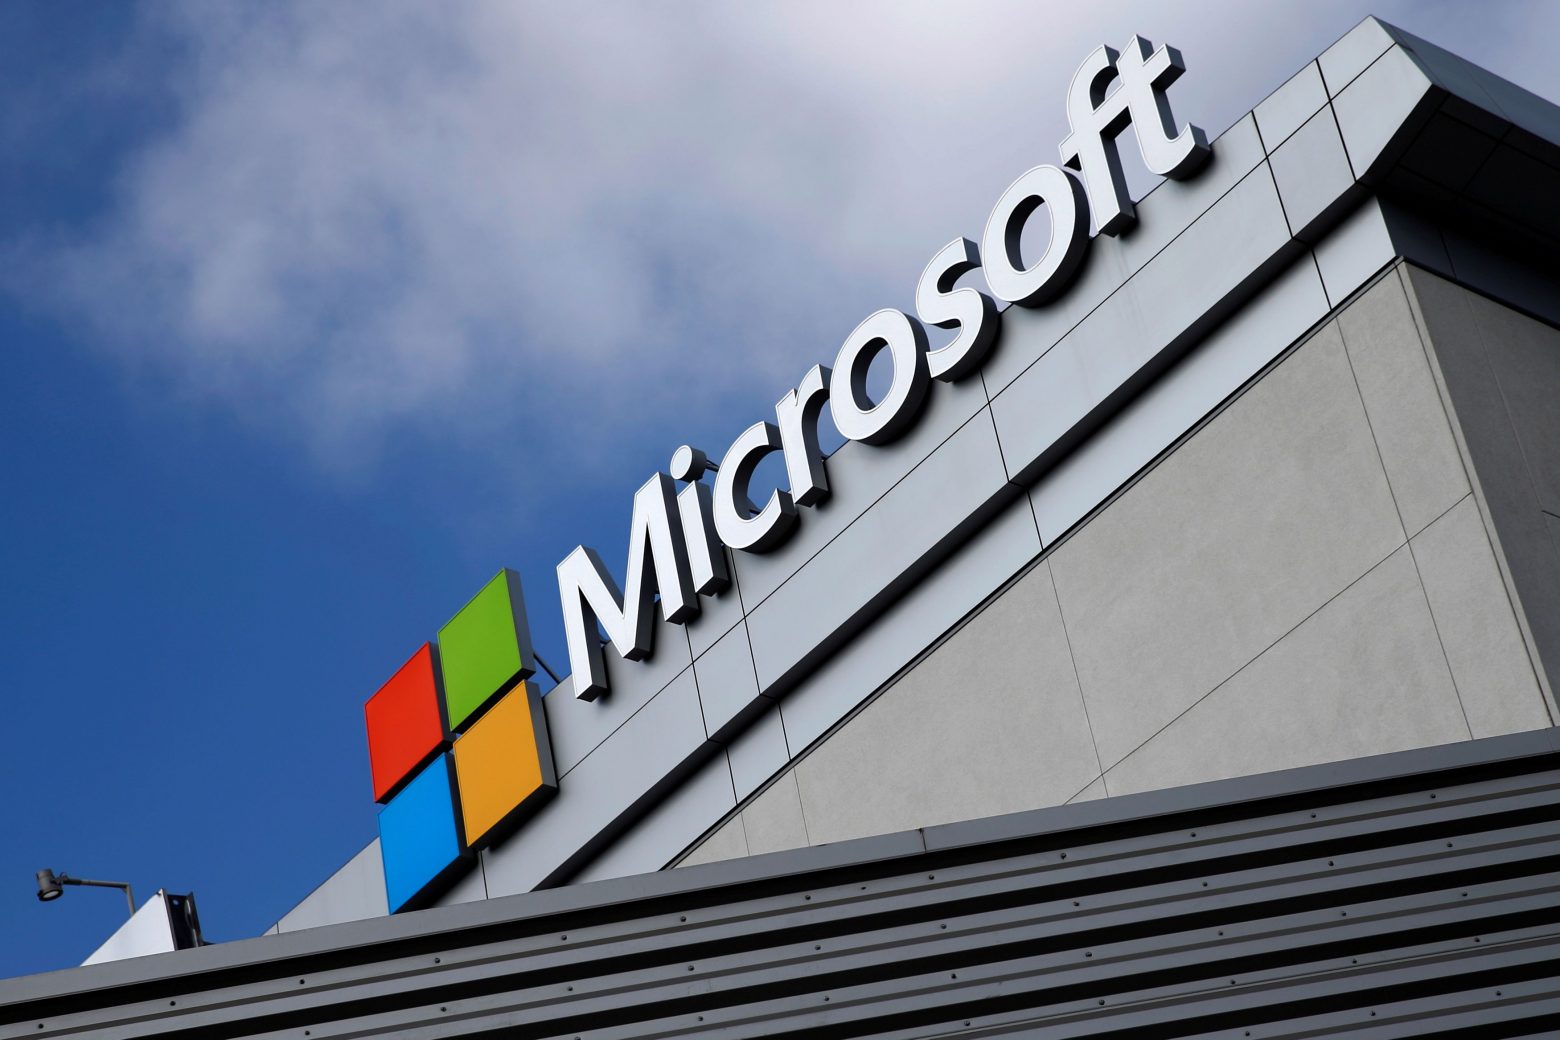 Microsoft: Τα δεδομένα των Ευρωπαίων χρηστών θα αποθηκεύονται στην ΕΕ